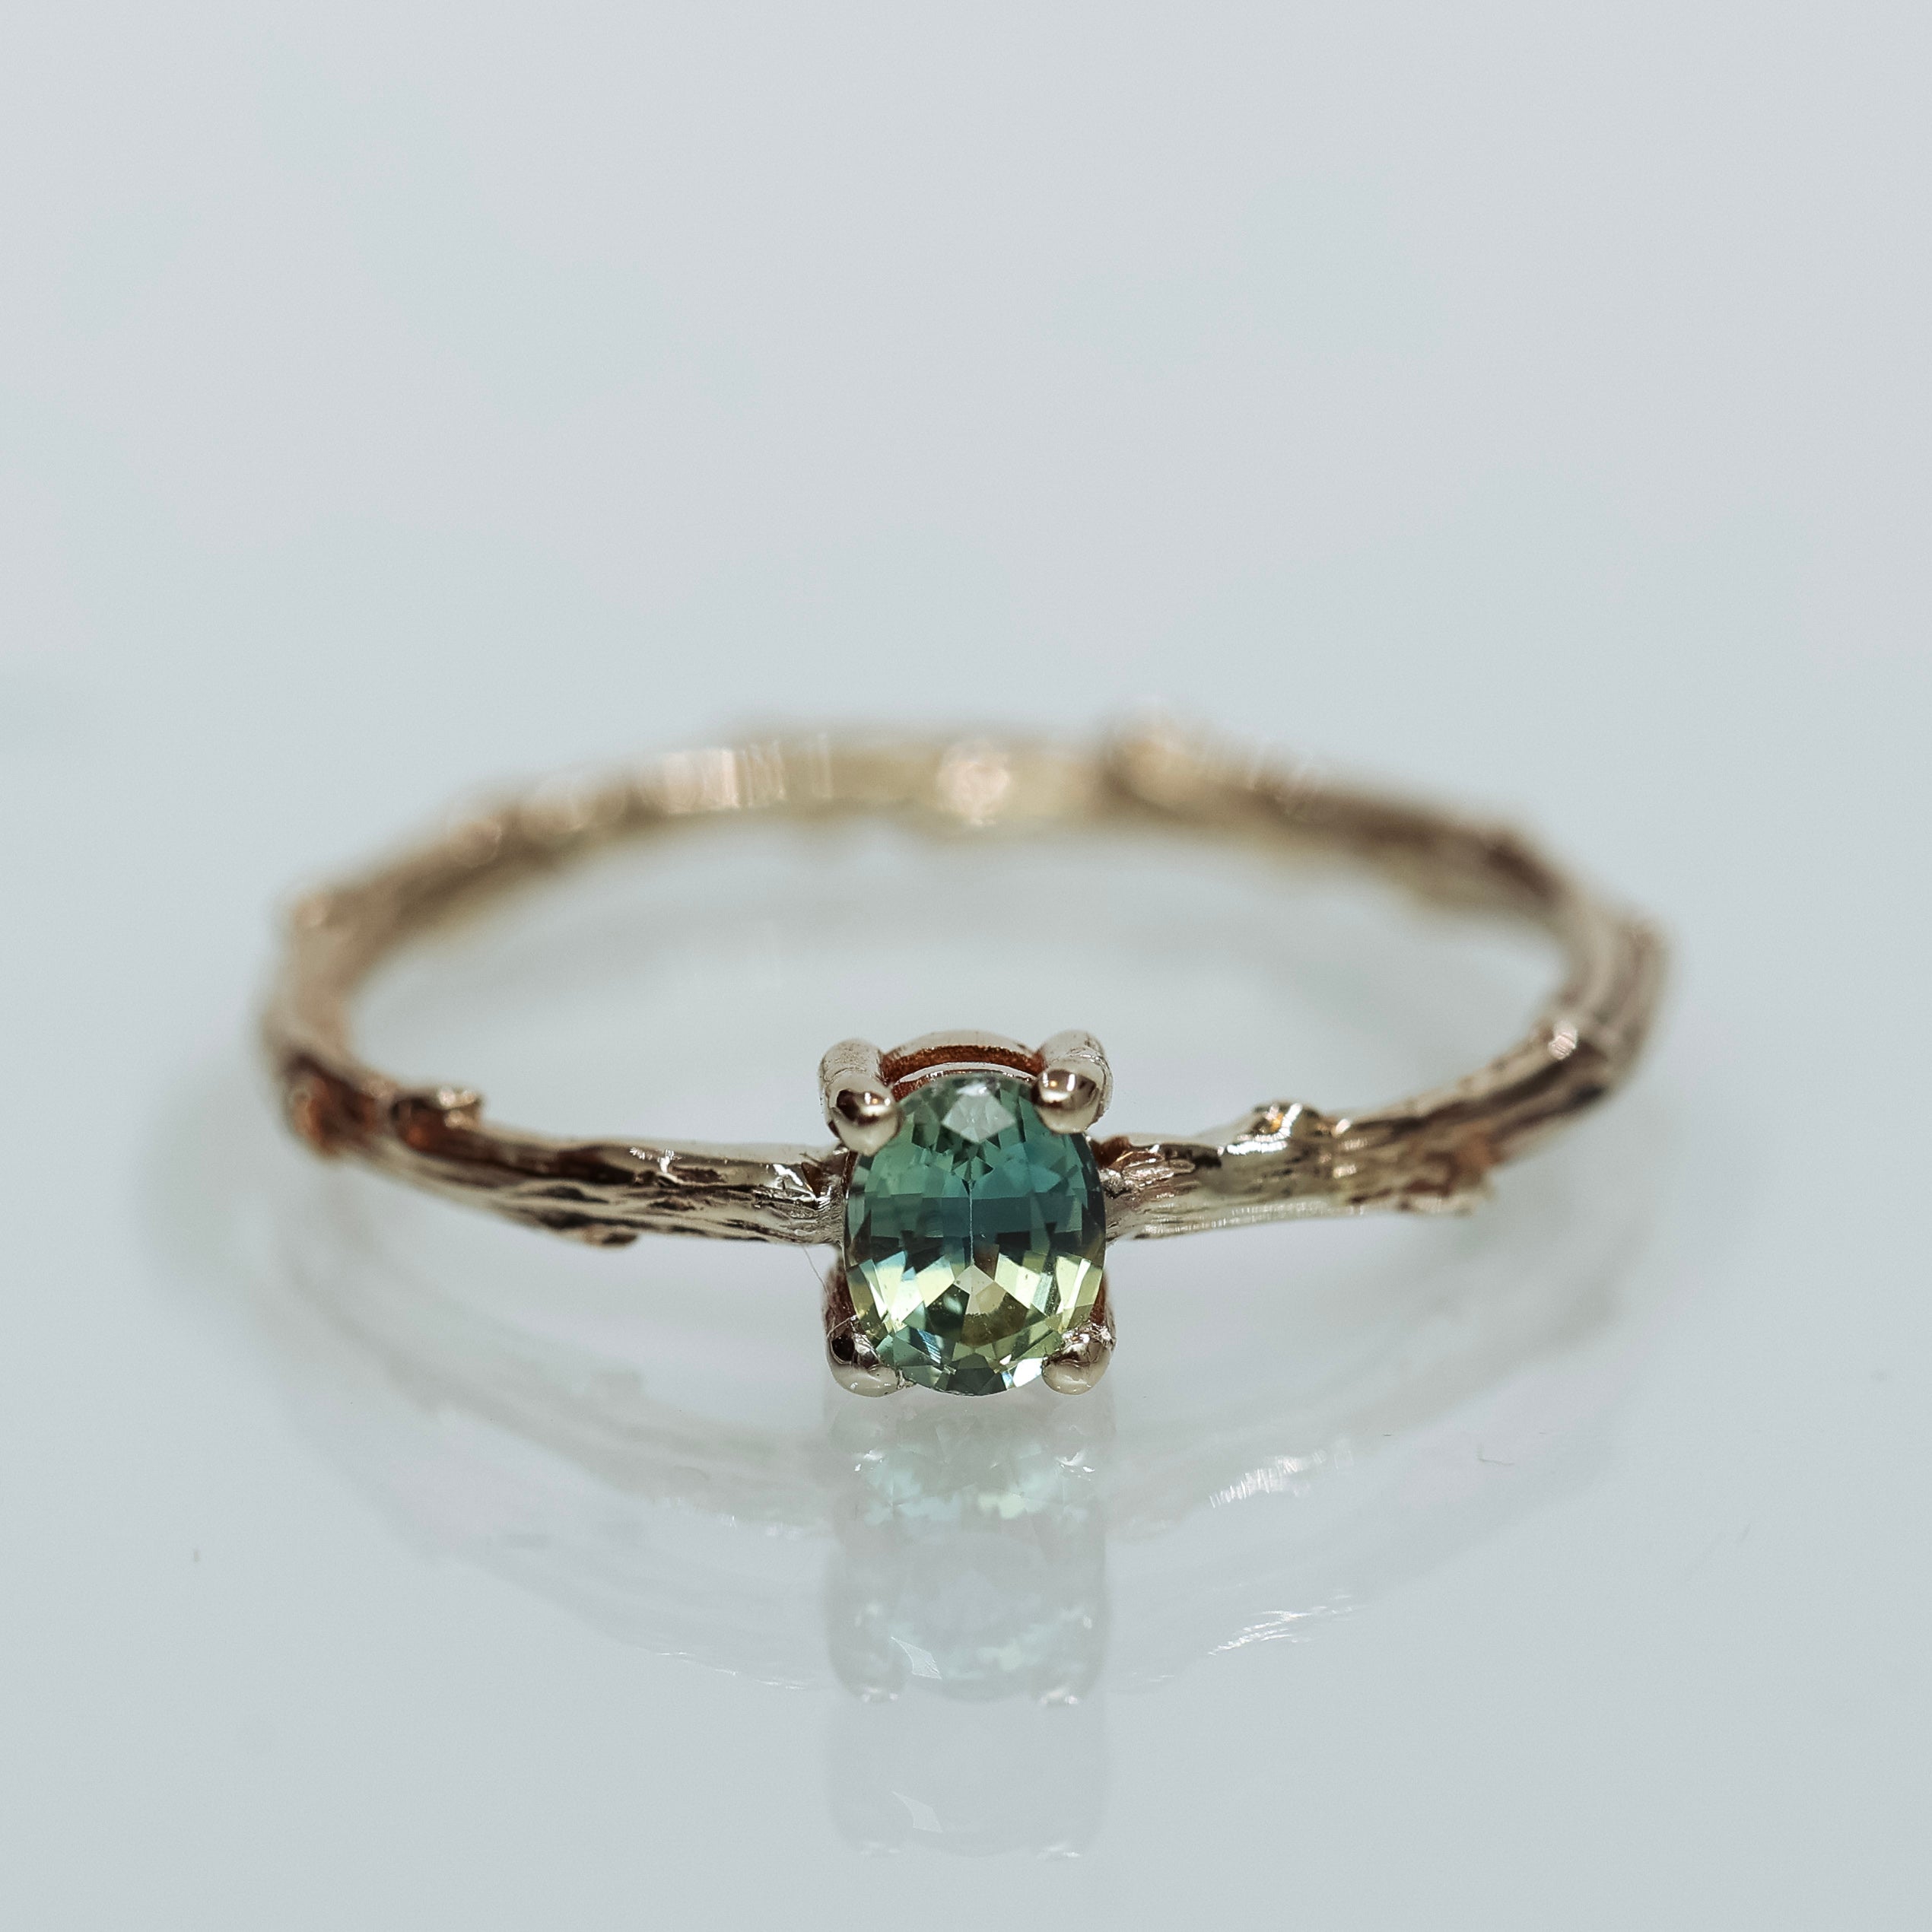 Extaraordinary sapphire parti ring